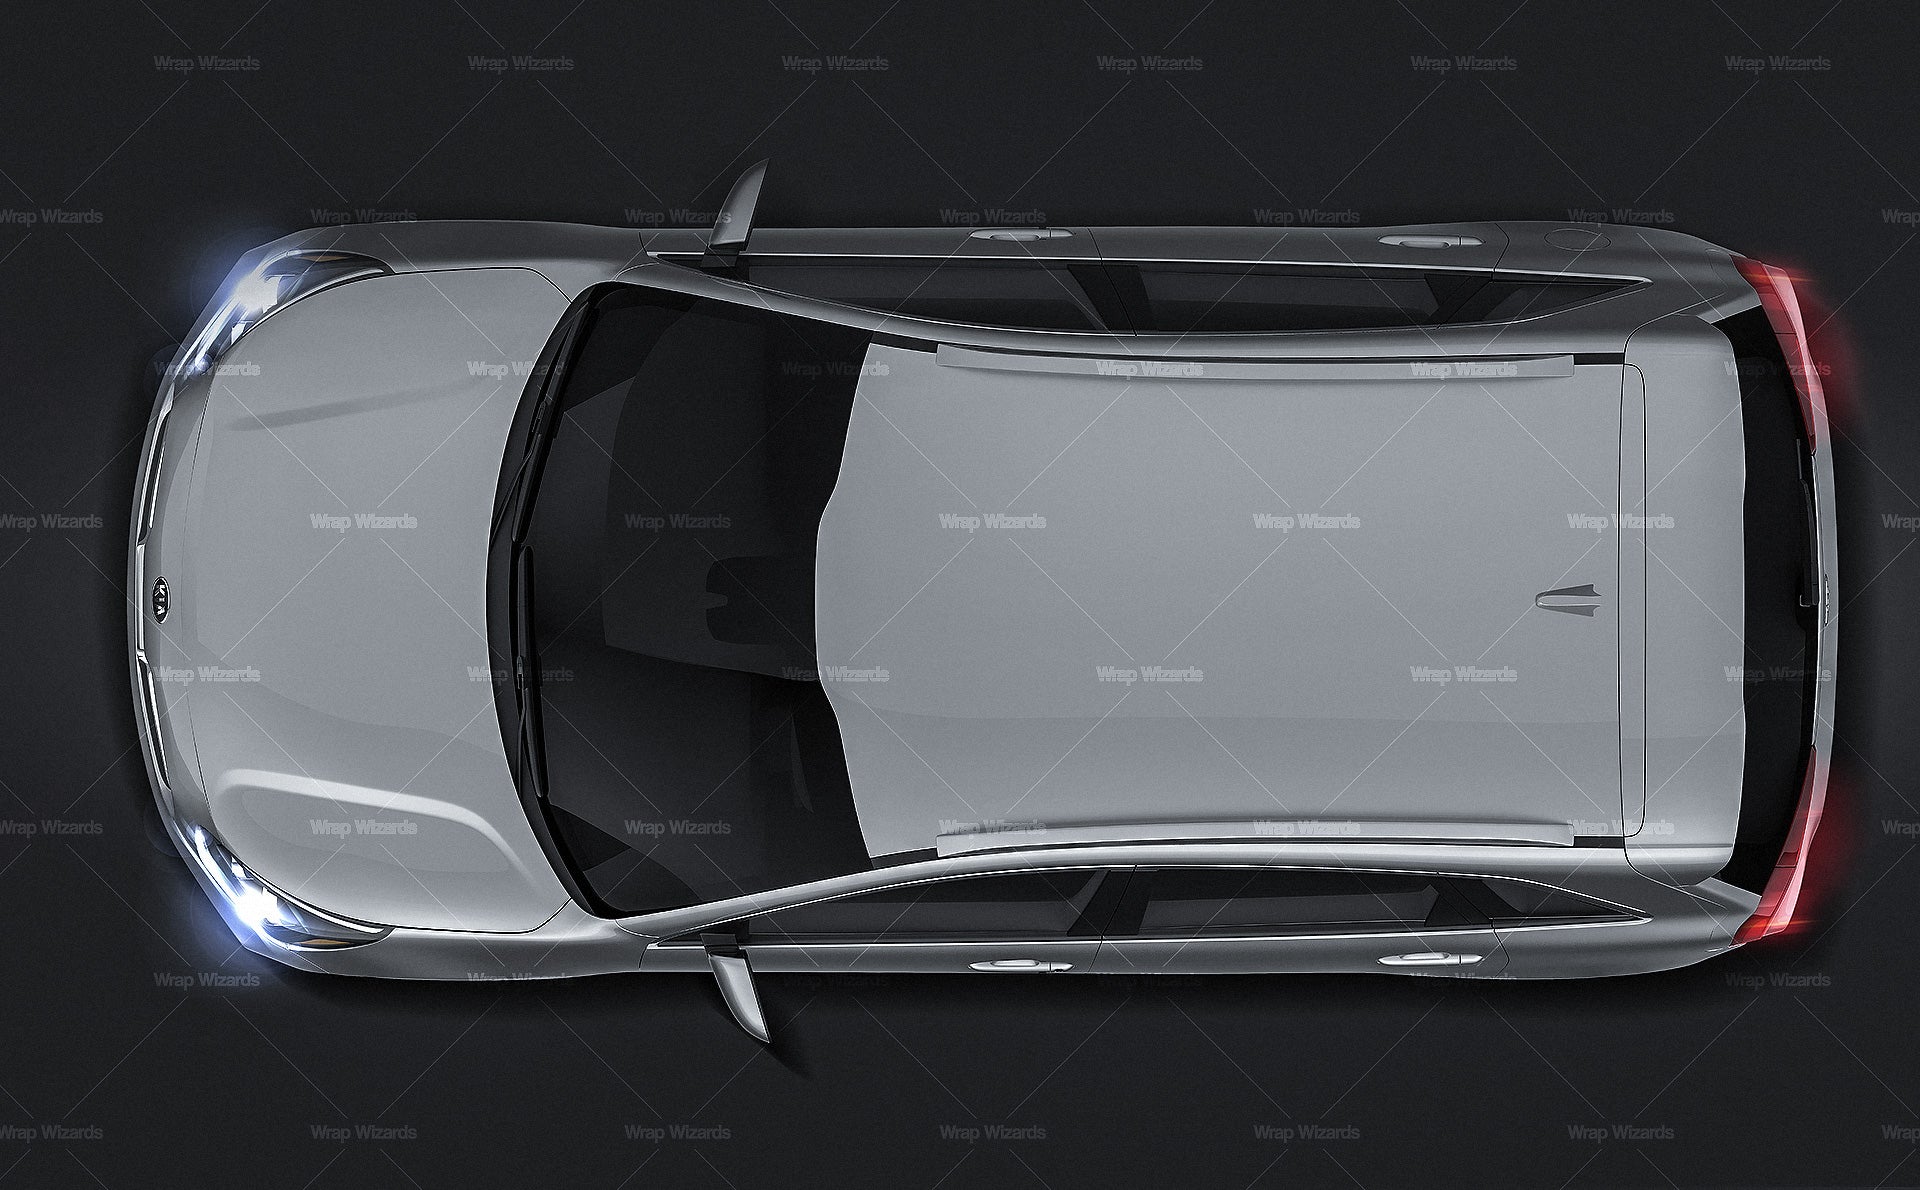 Kia Niro Hybrid 2020 glossy finish - all sides Car Mockup Template.psd